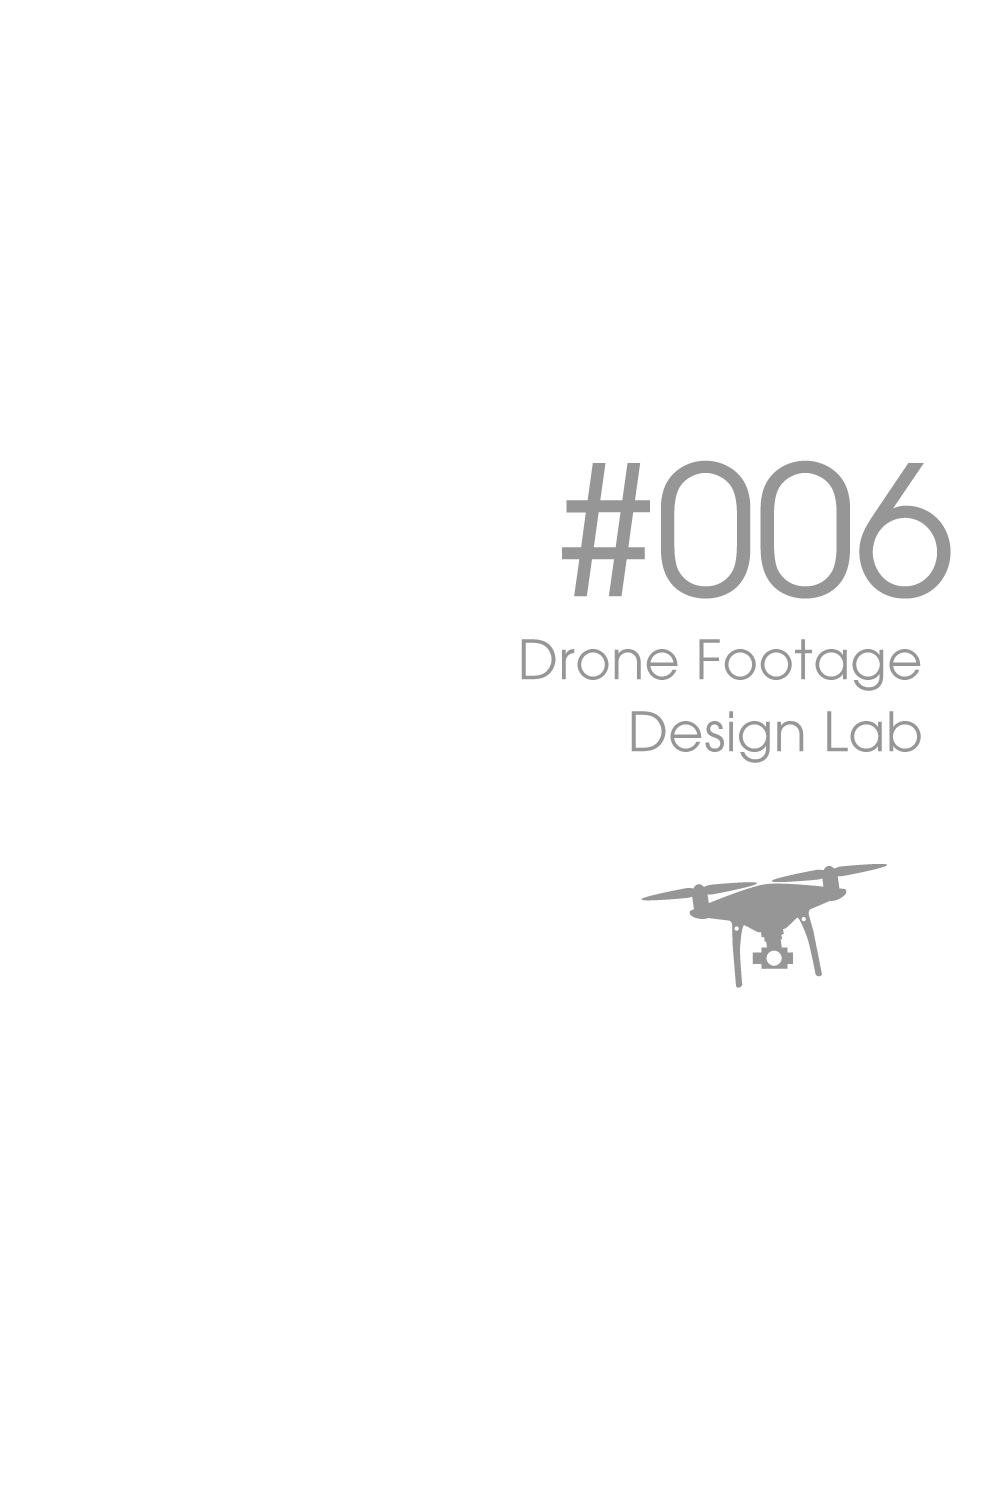 DroneFootage_DesignLab